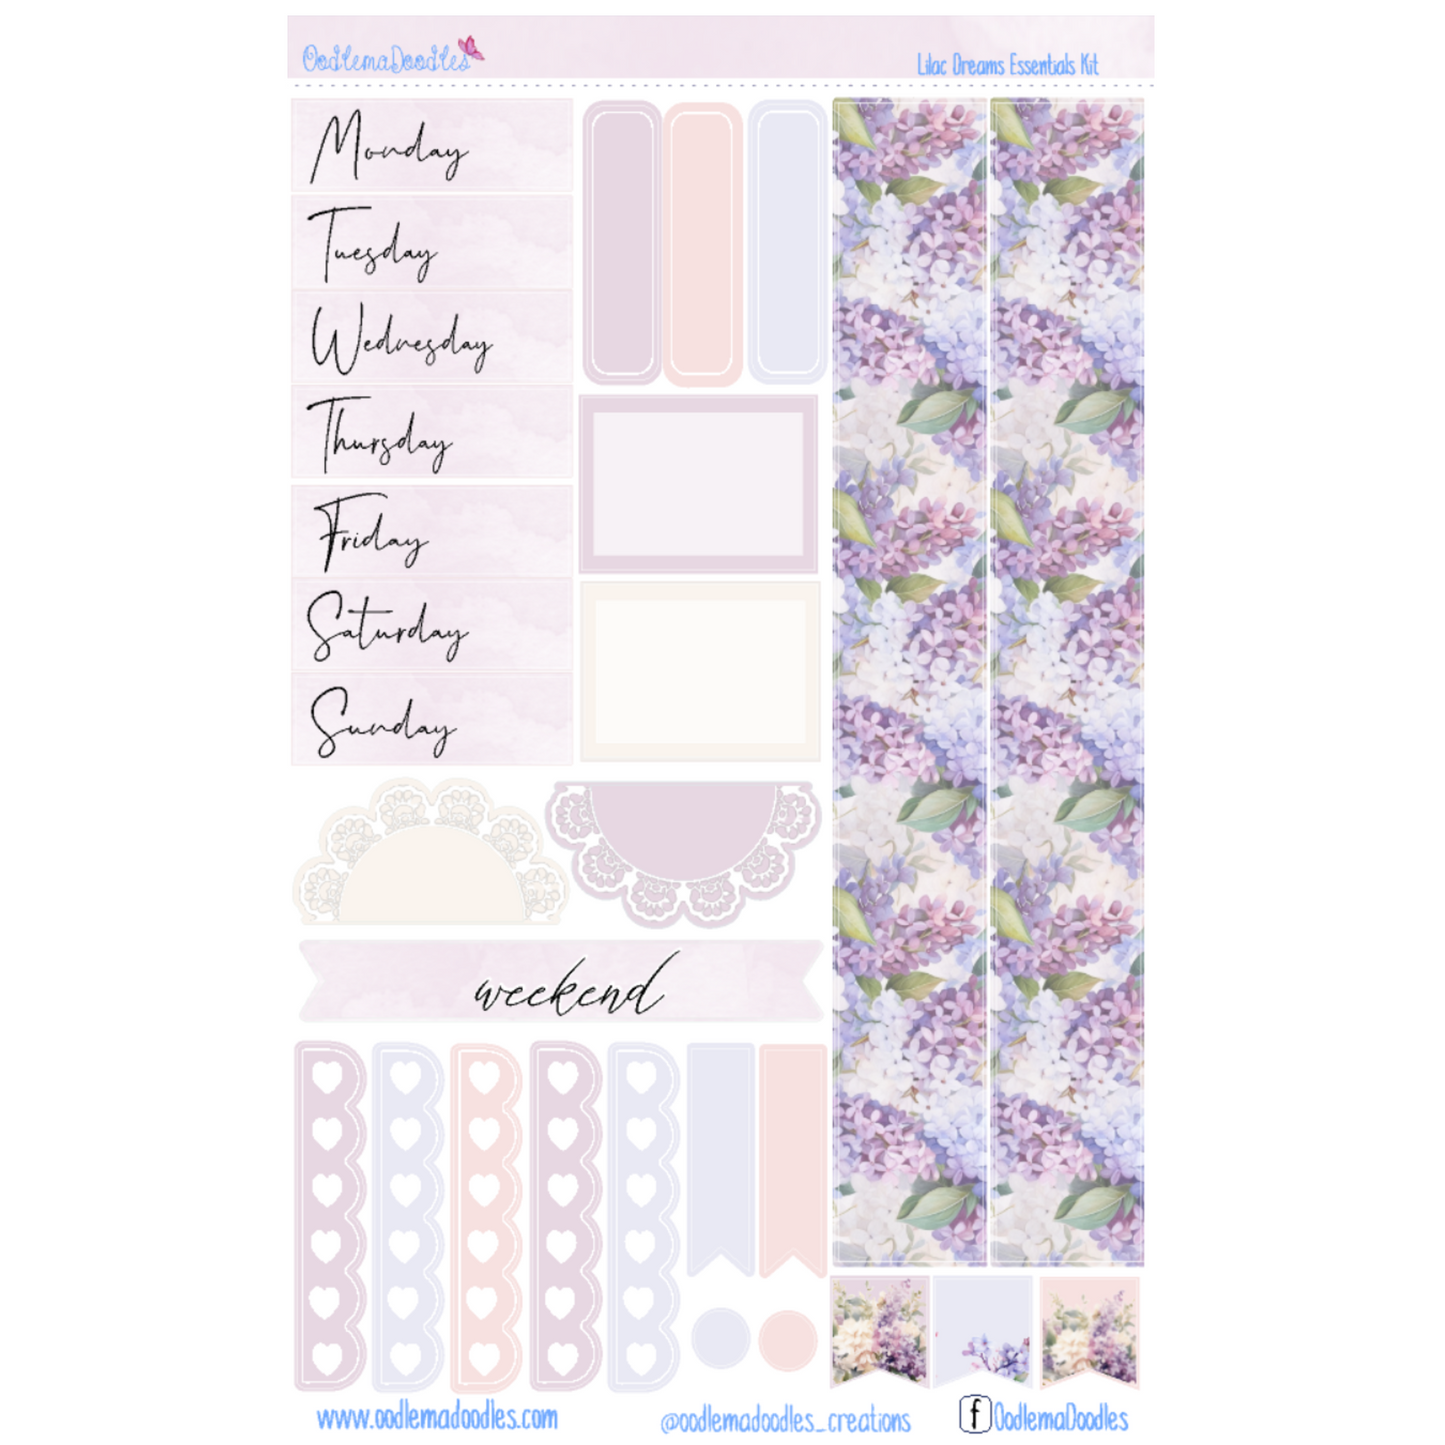 Lilac Dreams Essential Planner Sticker Kit